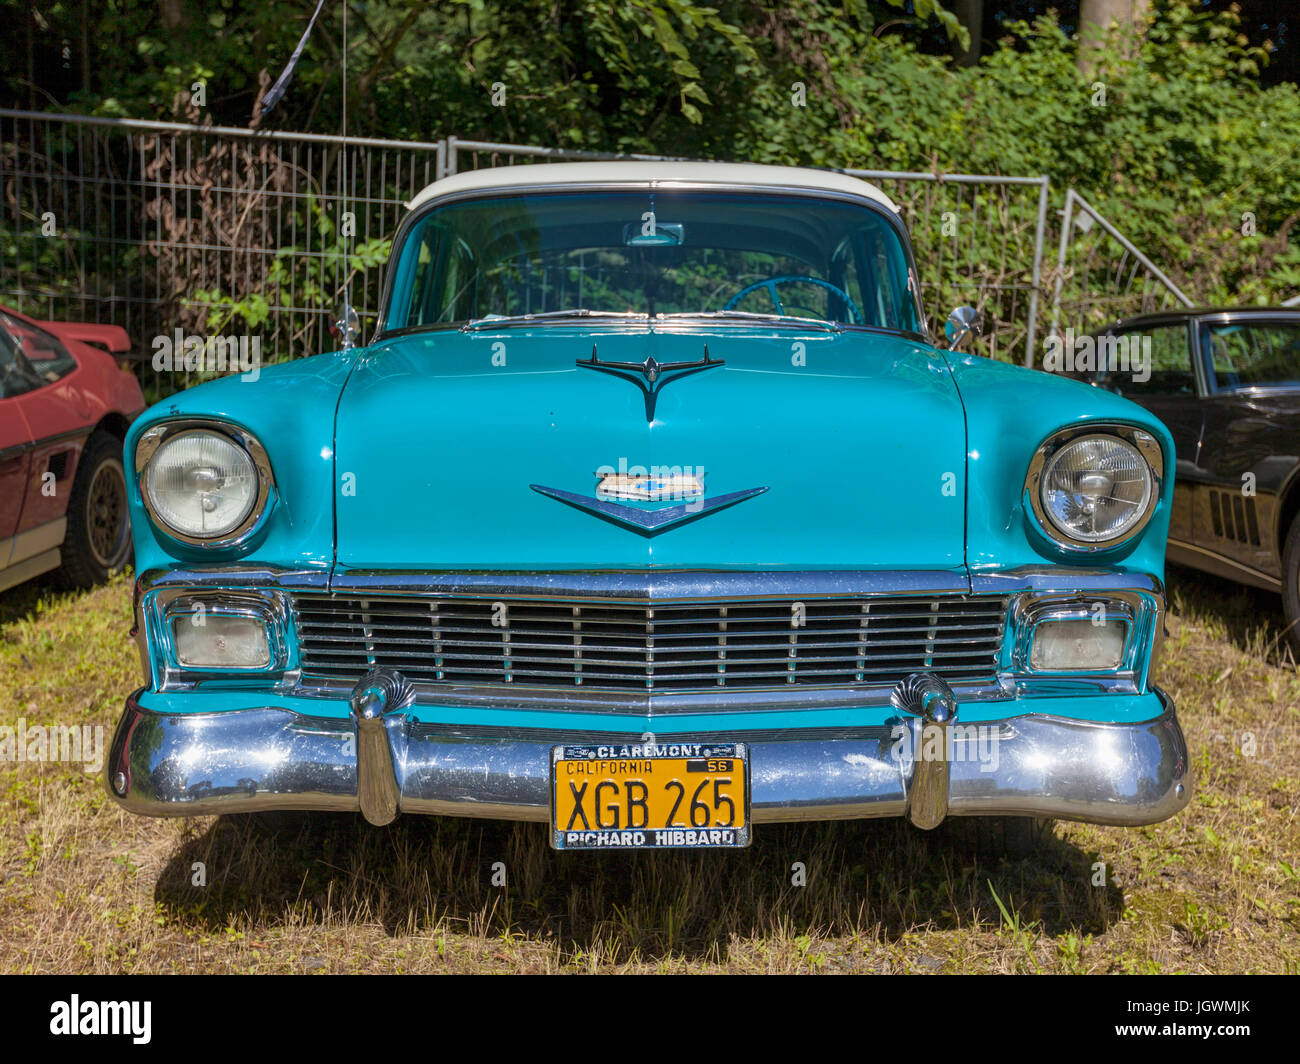 Stade, Germania - Luglio 9, 2017: un vintage Chevrolet Bel Air dal 1956 all'estate ci guida car meeting. Foto Stock